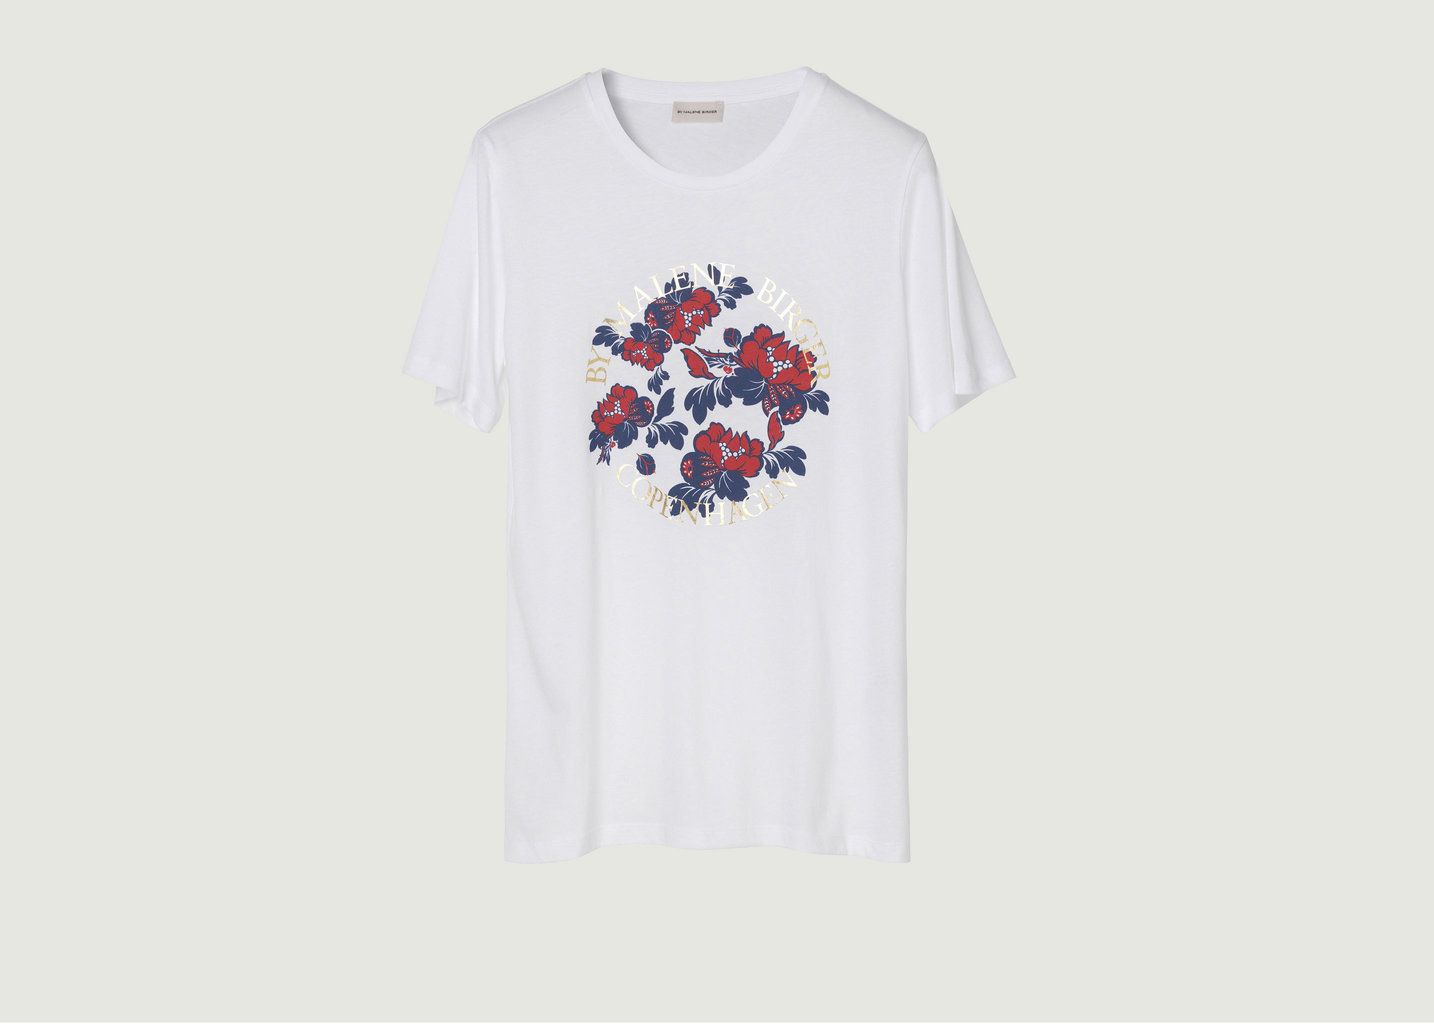 Azalea floral print t-shirt - By Malene Birger